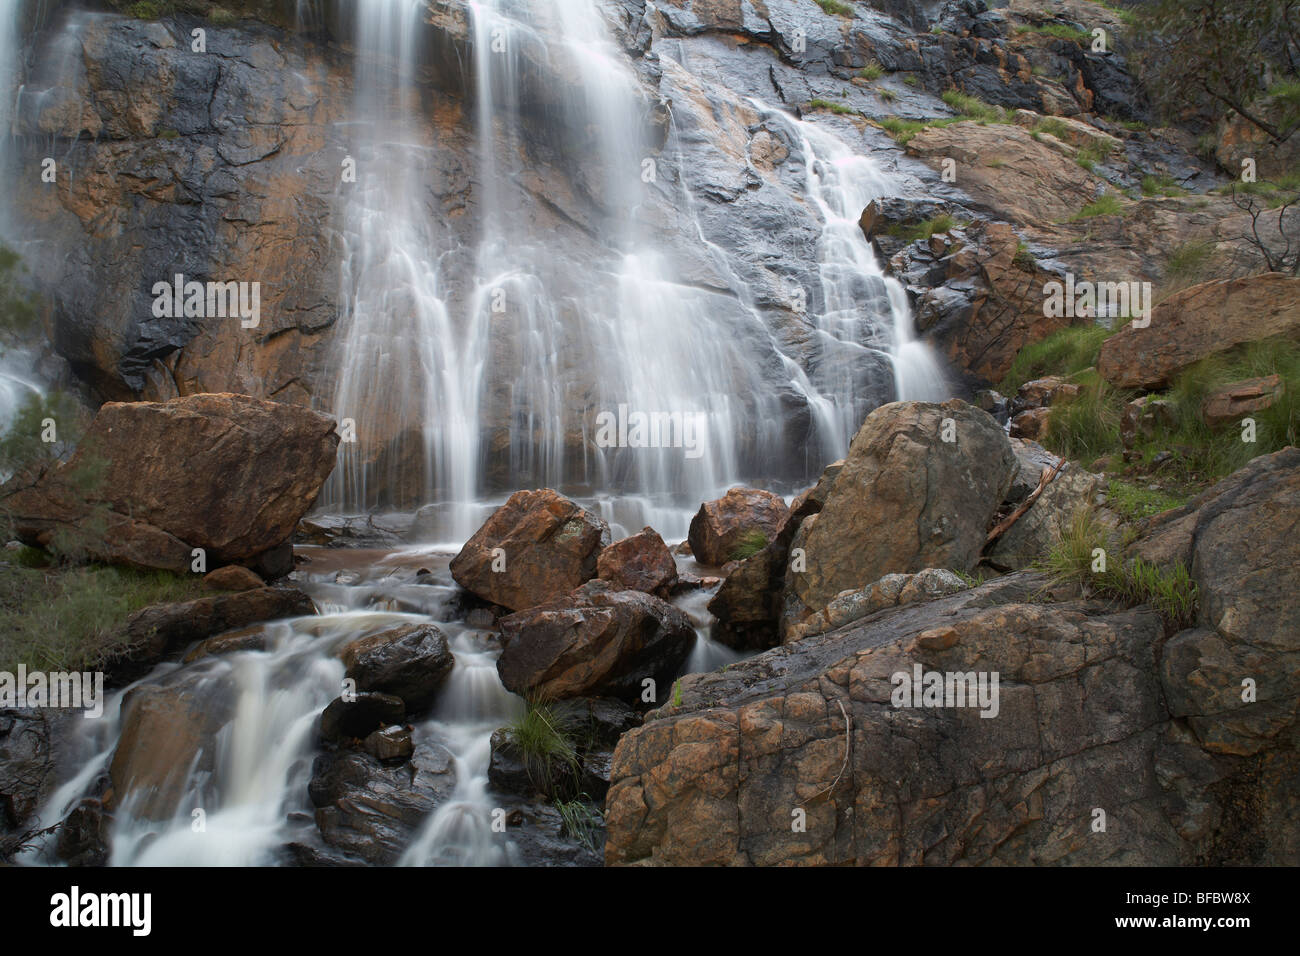 Waterfall in the Australian bush Stock Photo